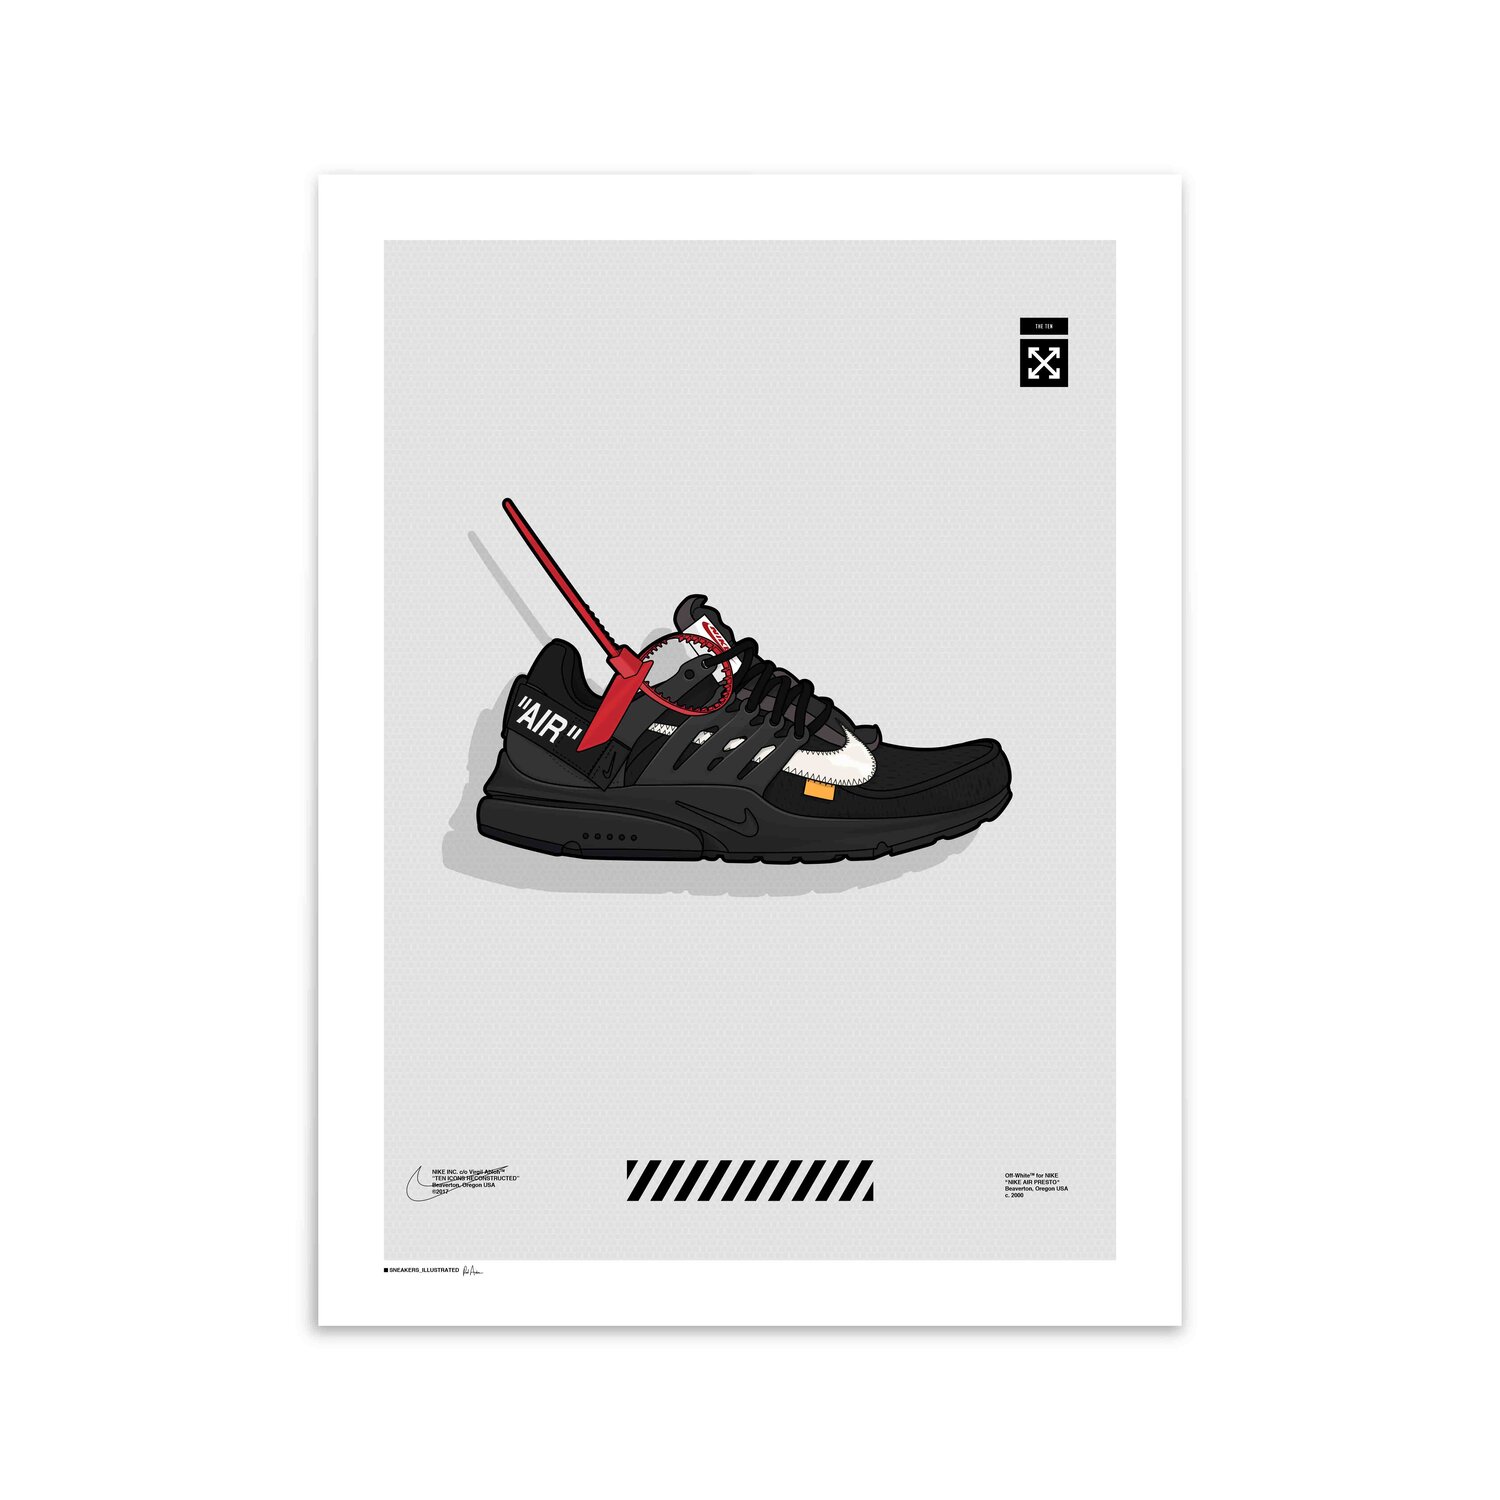 Off-White X Nike Air Presto 'Black' Sneakers Illustrated